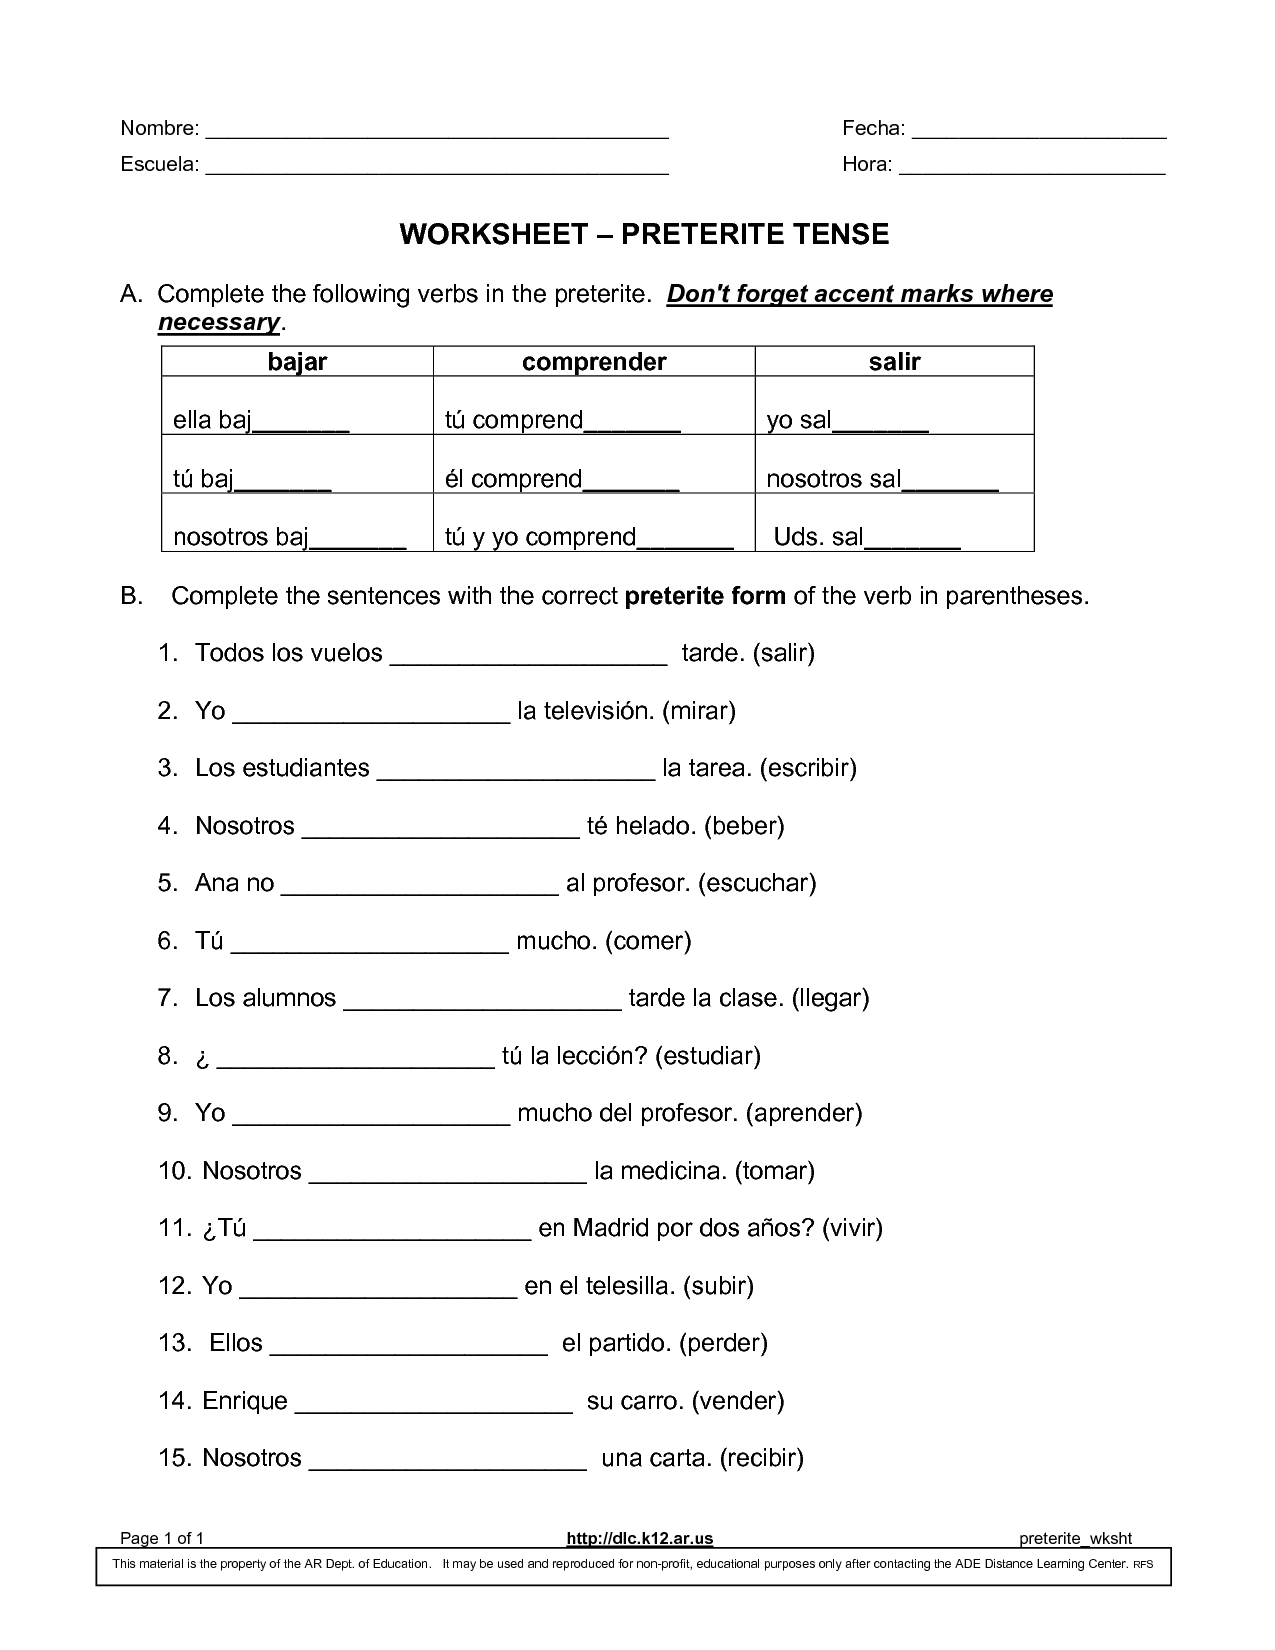 Spanish Preterite Tense Practice Worksheet Image